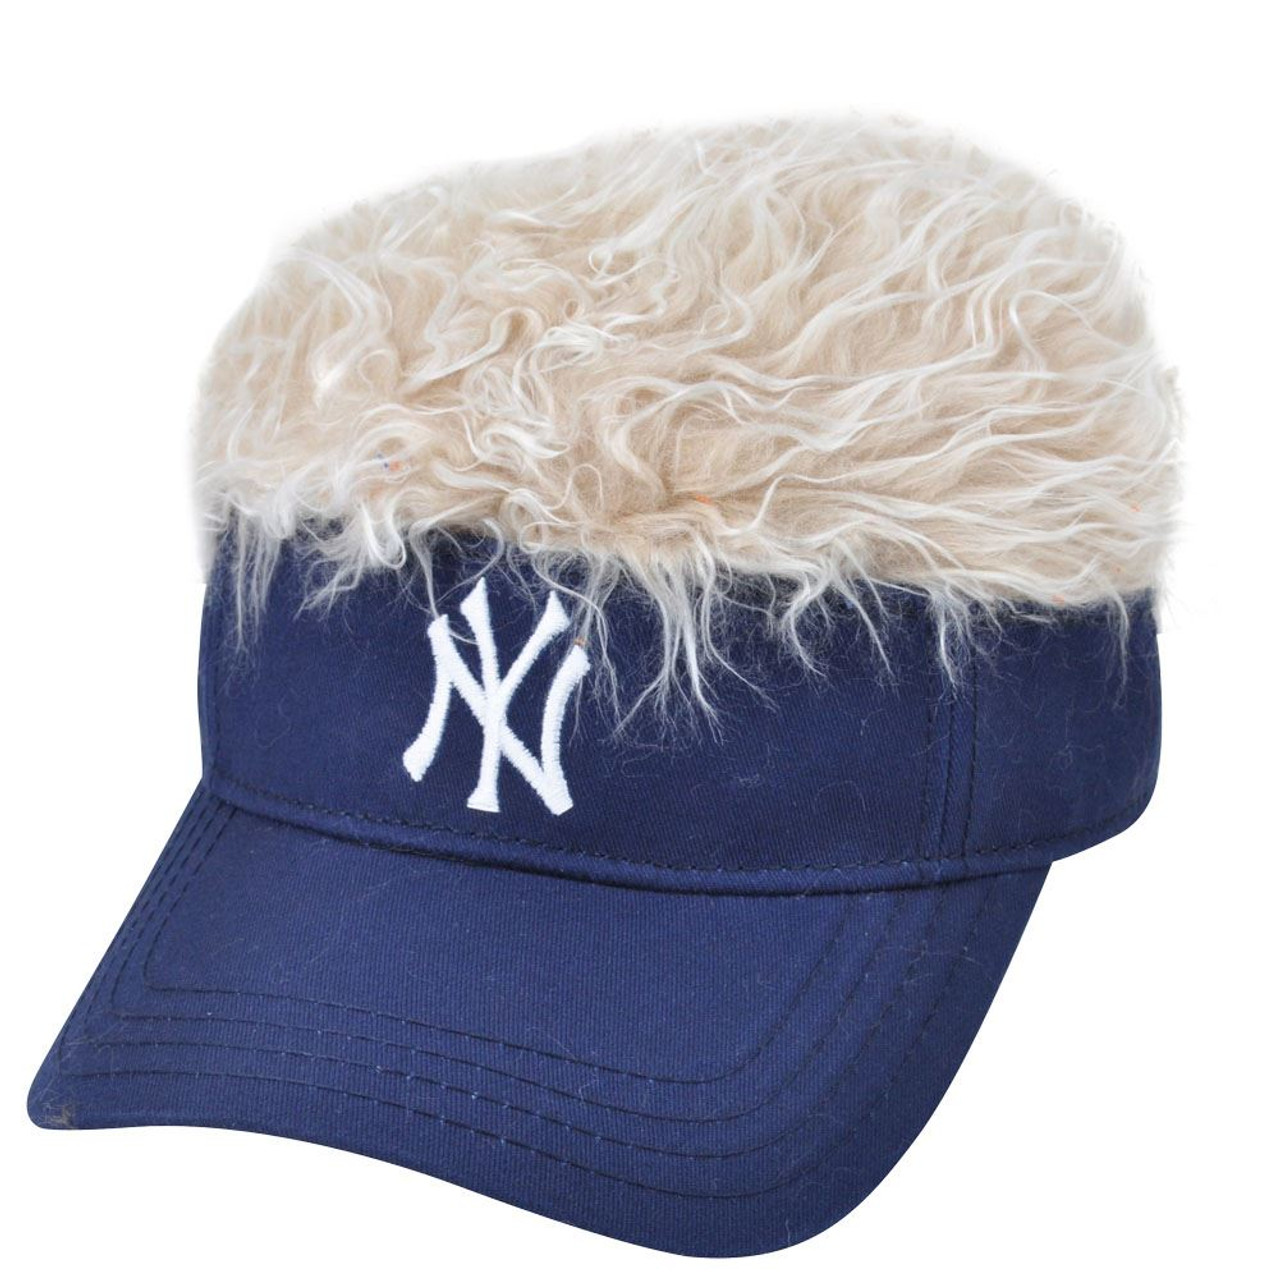 Yankees Store Flair NY Velcro New Hat Adjustable Hair Creed Cap Visor Fan MLB York - Blonde